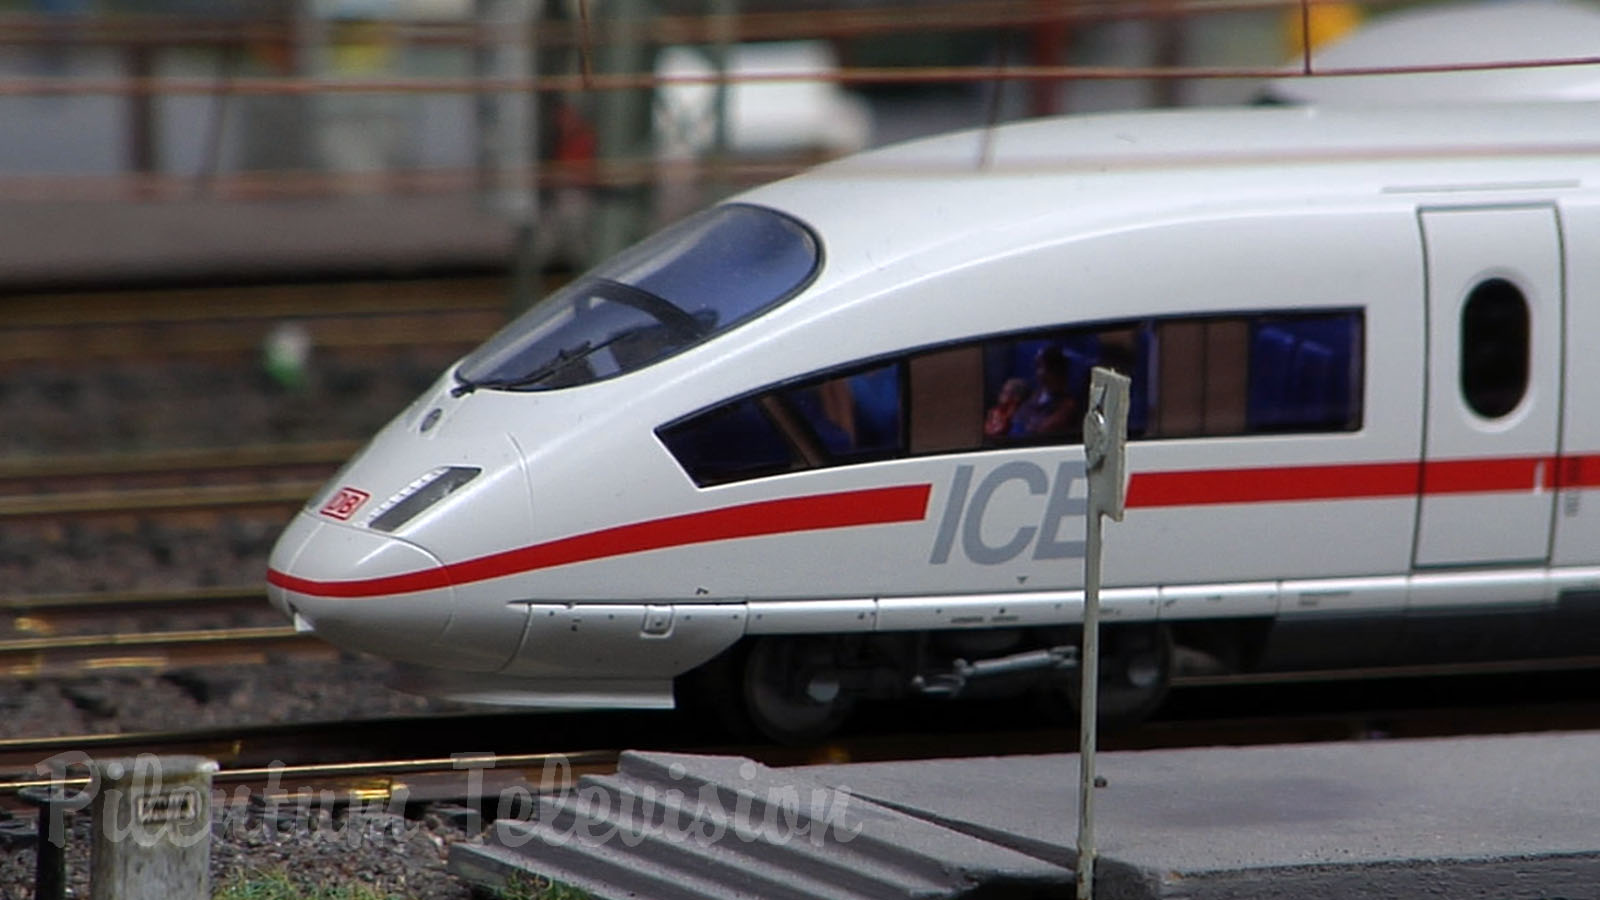 Fleischmann HO Scale Model Railroads and Trains - Realistic Model Train Layout built by Artist Bernhard Stein